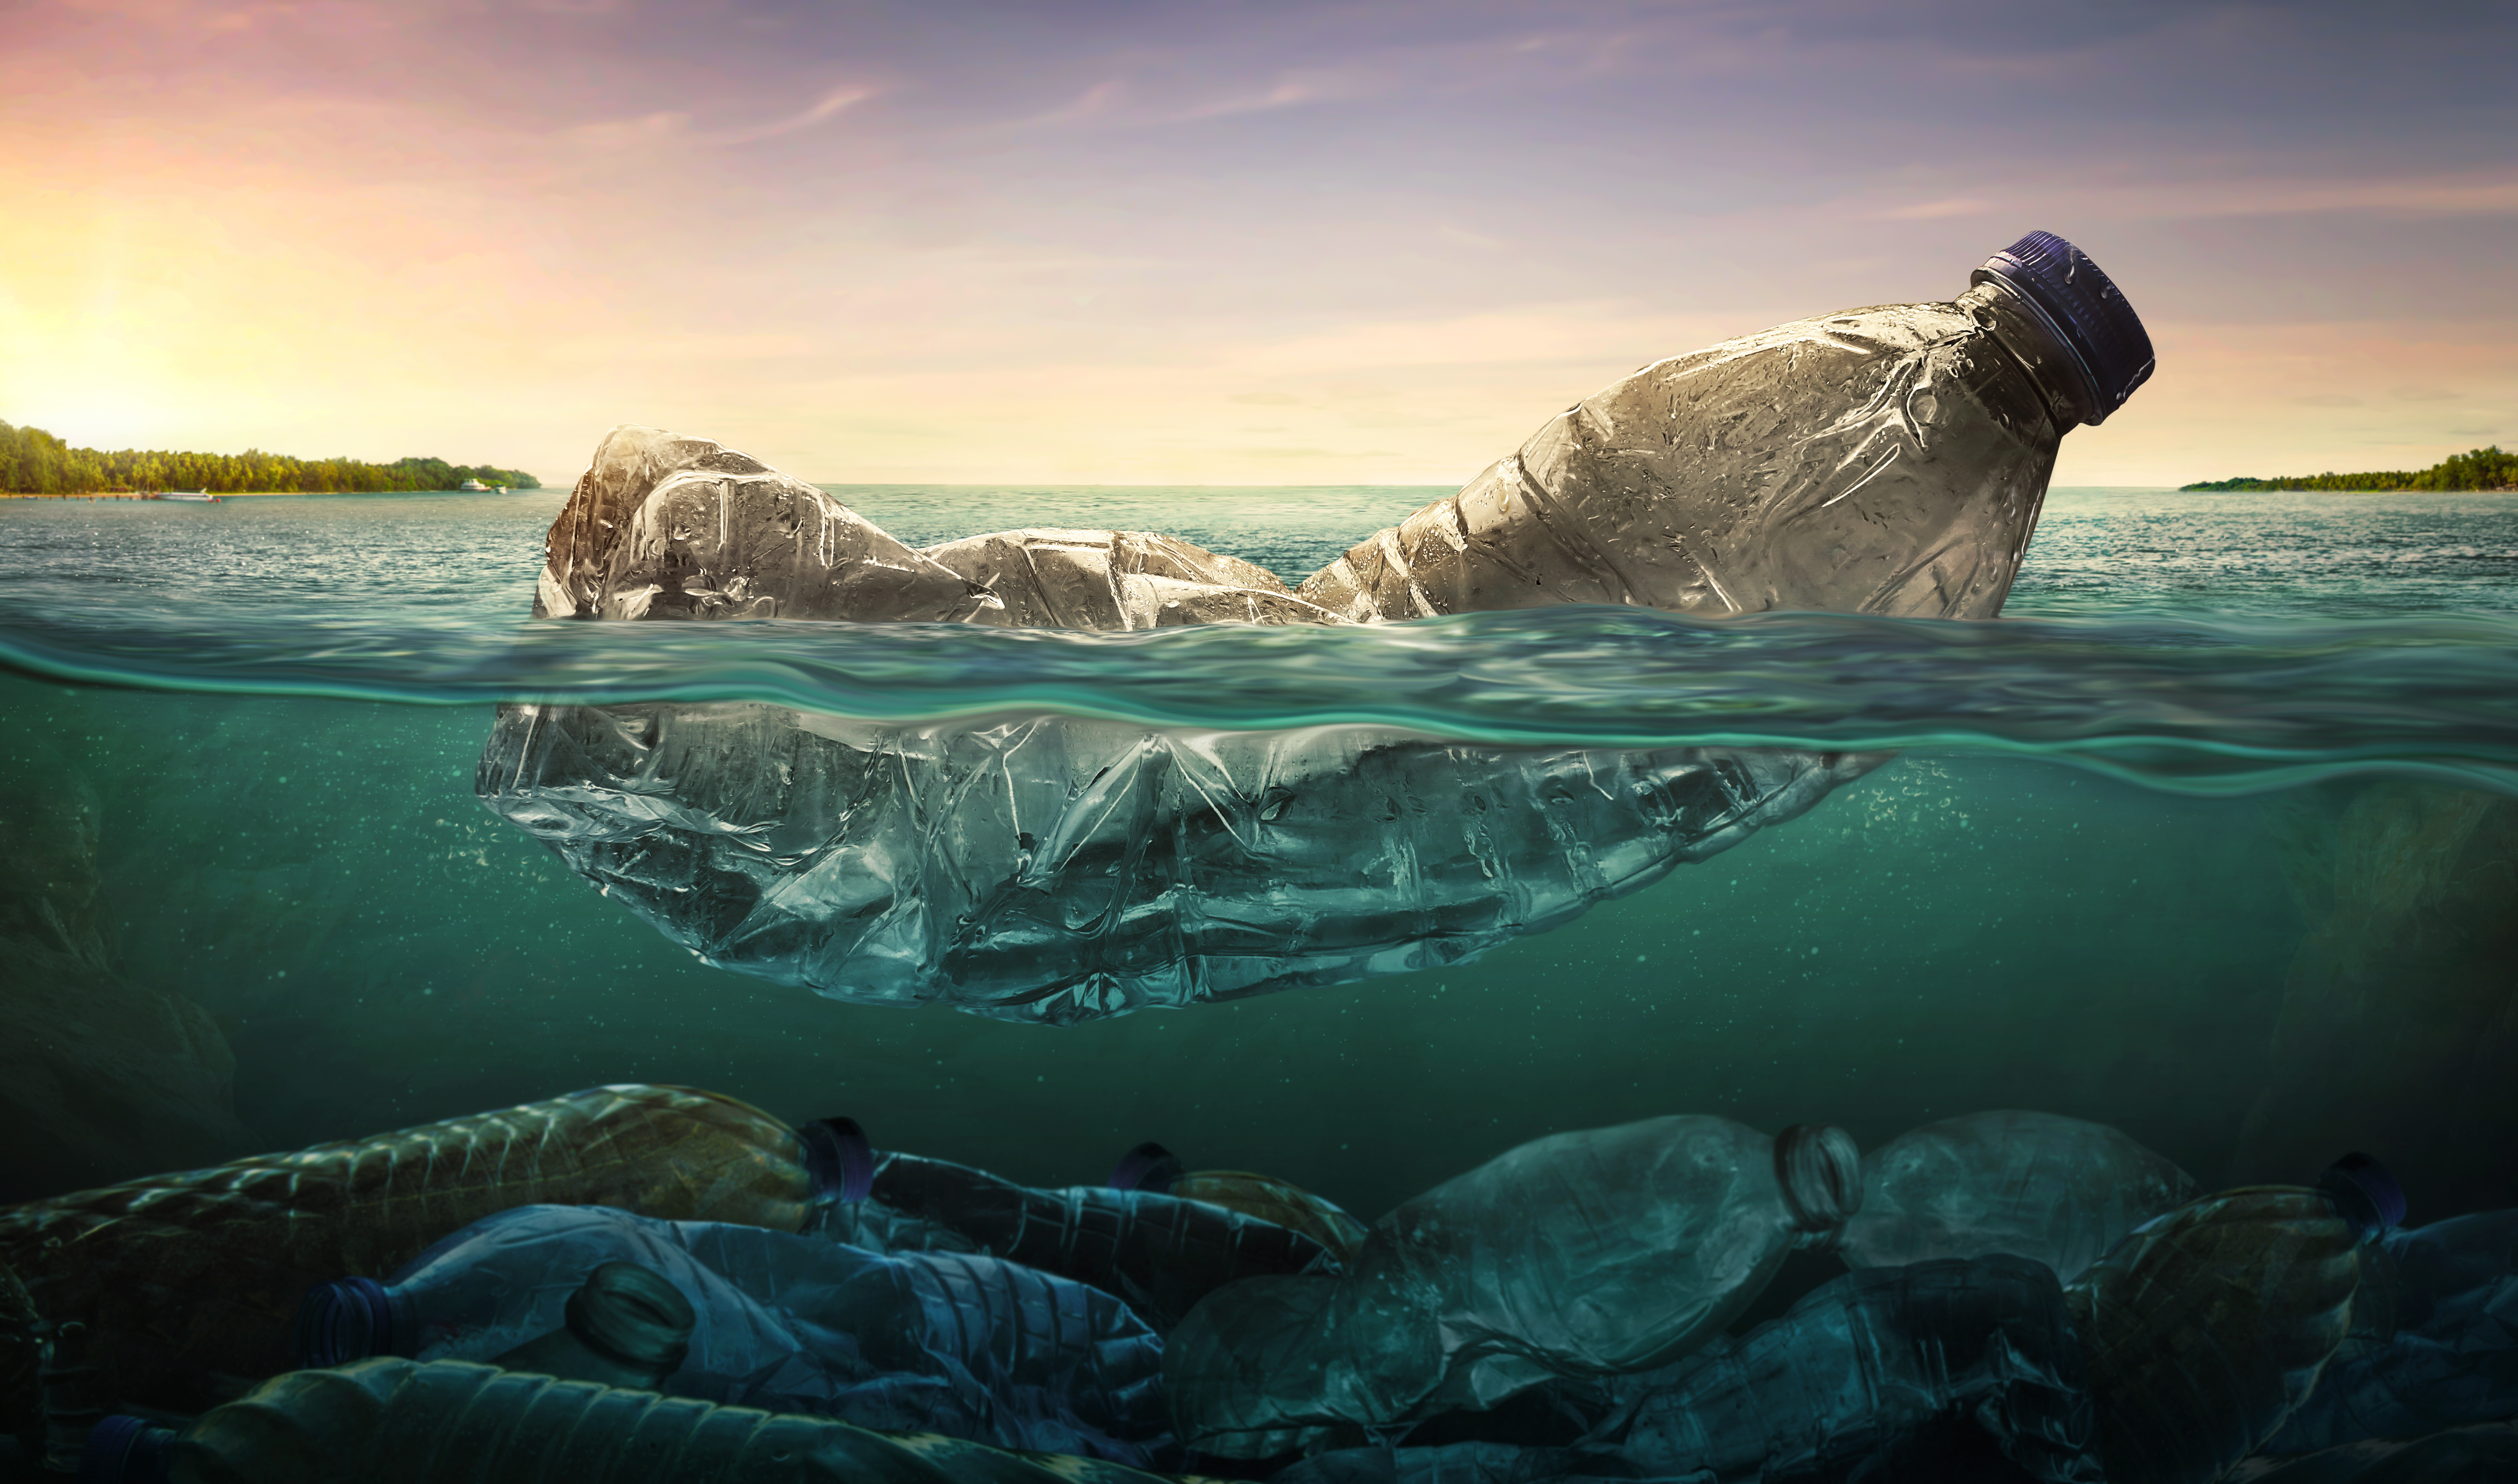  Plastic water bottles pollution in ocean (Environment concept)  © chaiyapruek - stock.adobe.com